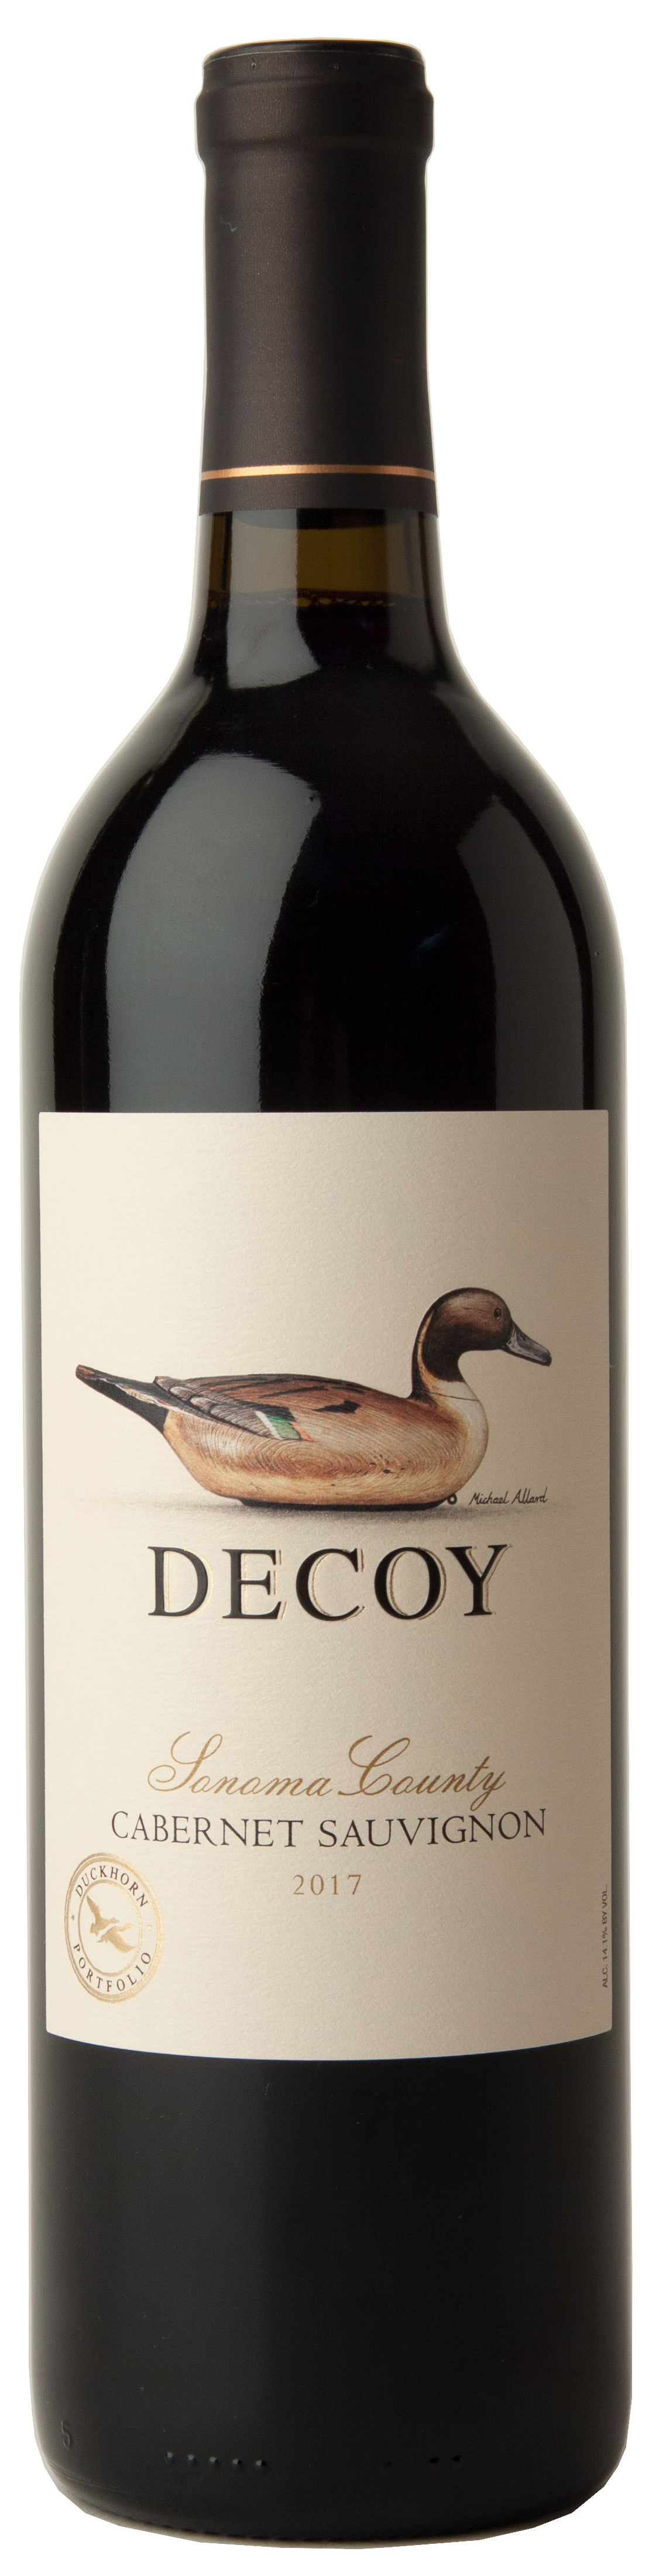 images/wine/Red Wine/Decoy Cabernet Sauvignon .jpg